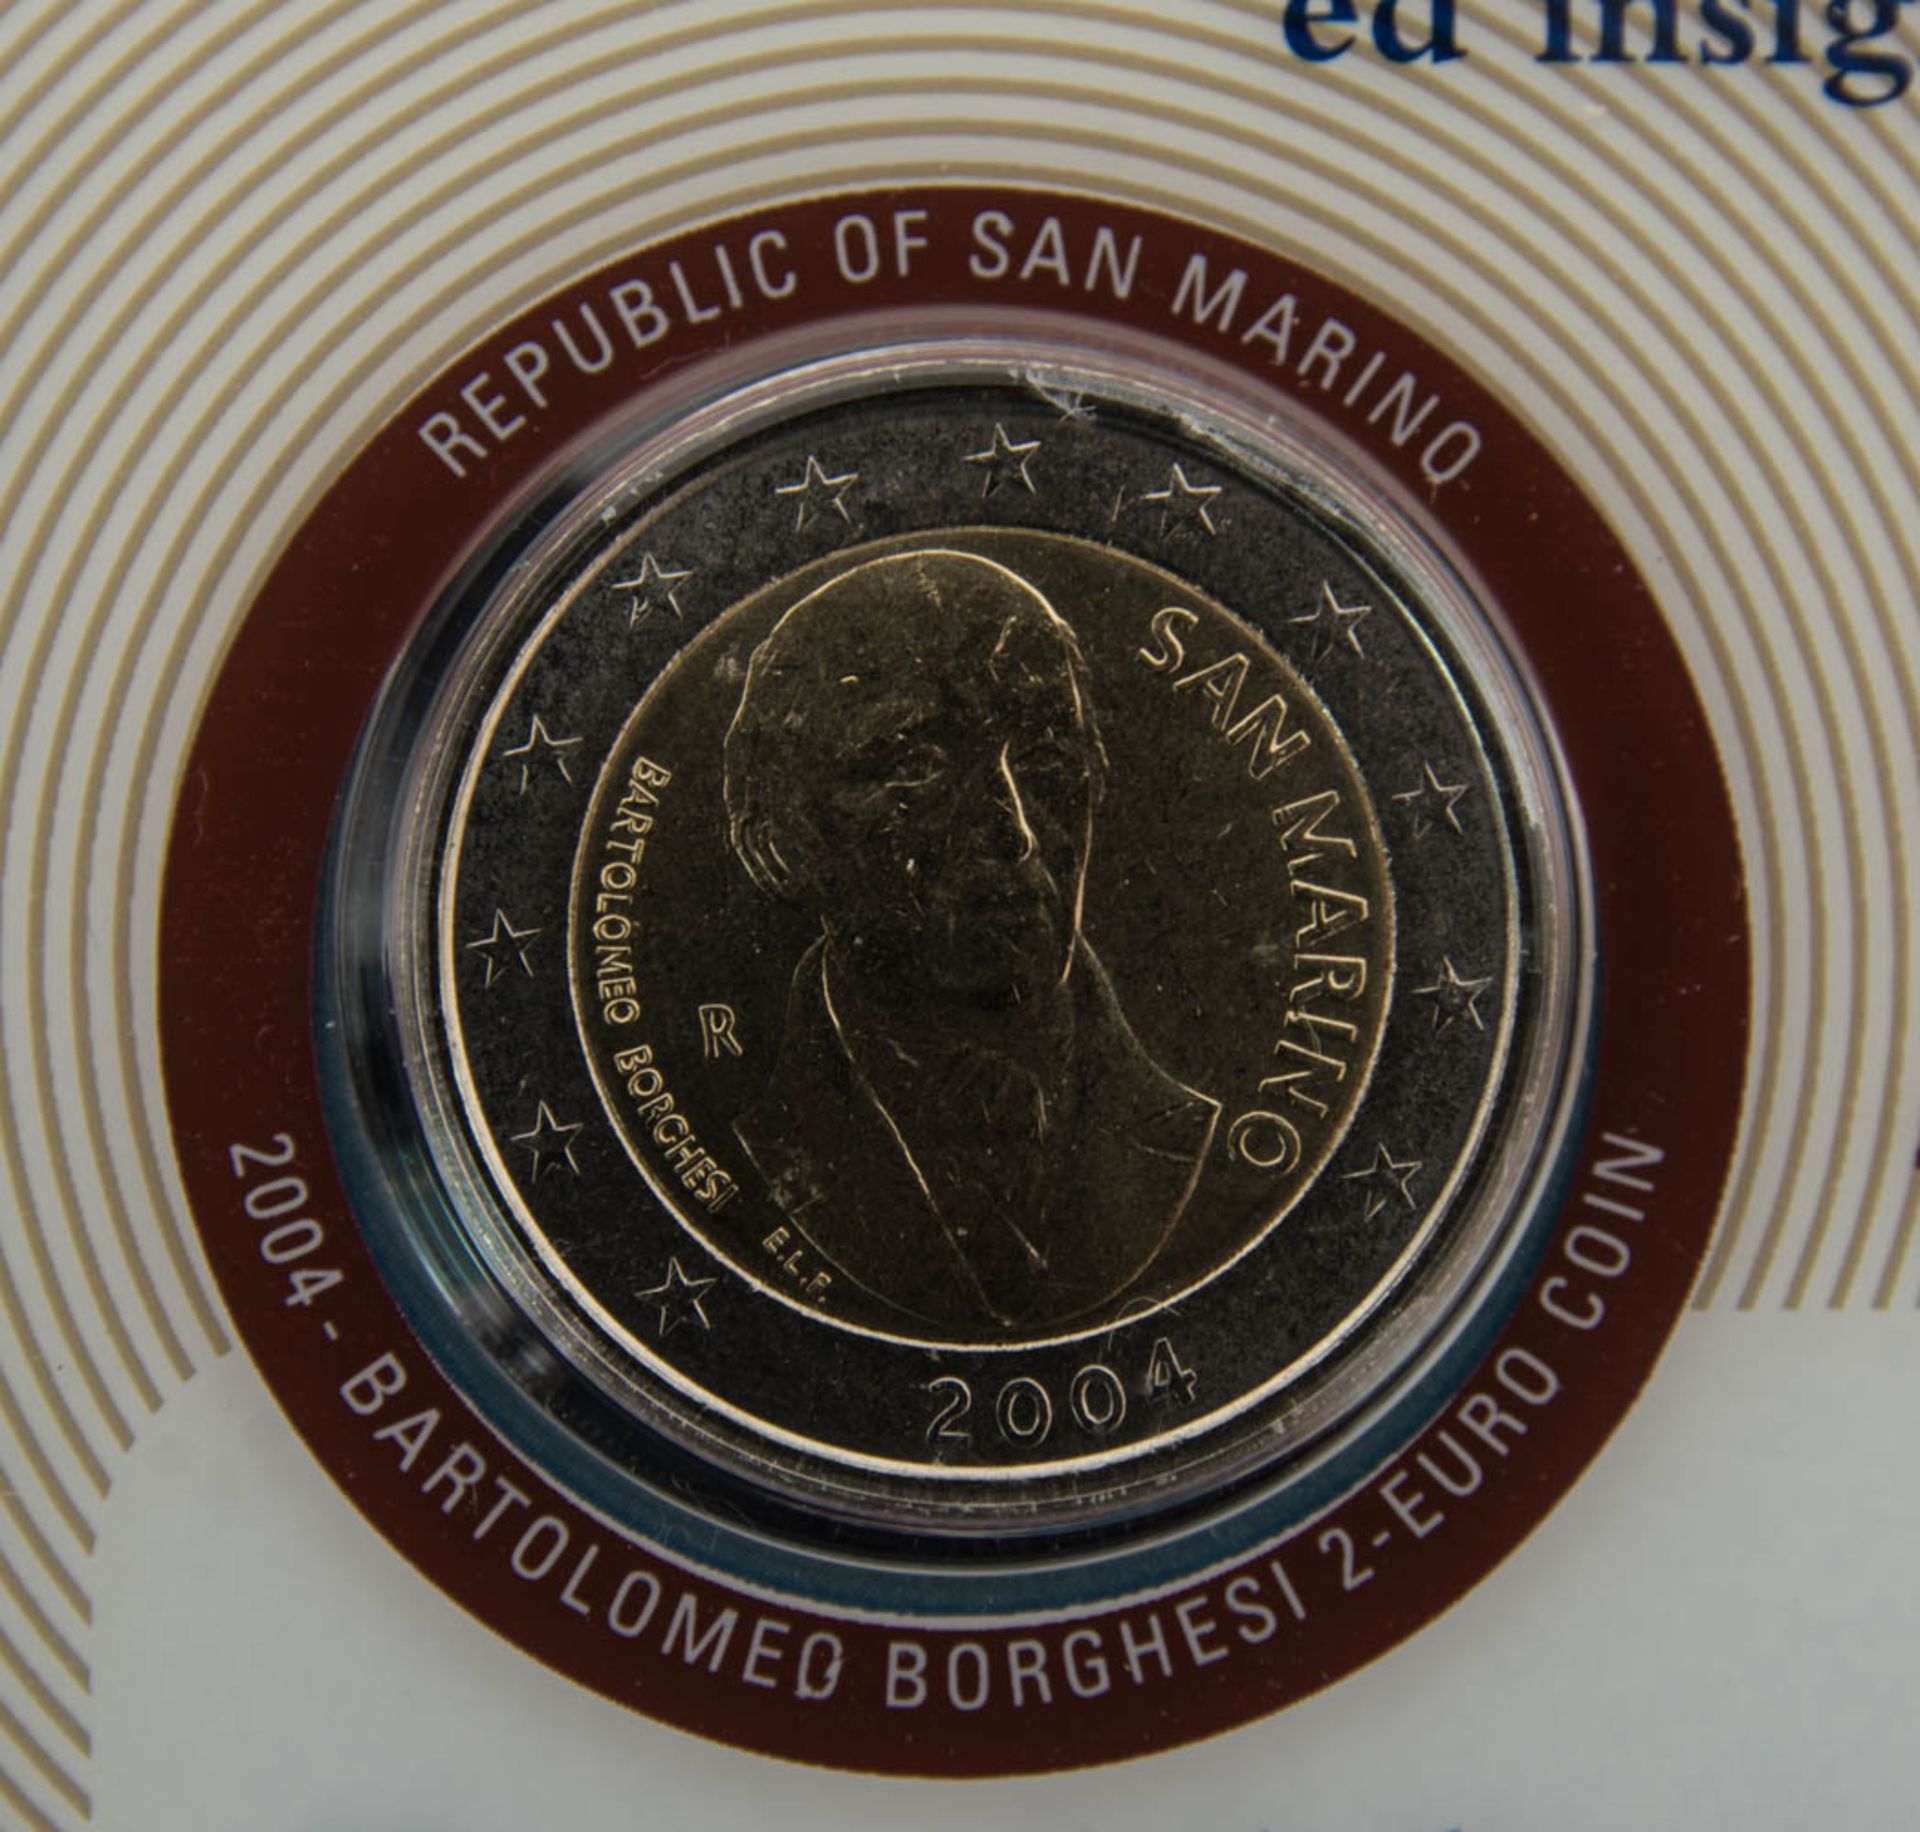 San Marino: 2 x 2 € 2004, 2005.in Ausgabefoldern.2 € Gedenkmünze 2004 Borghe - Image 4 of 4